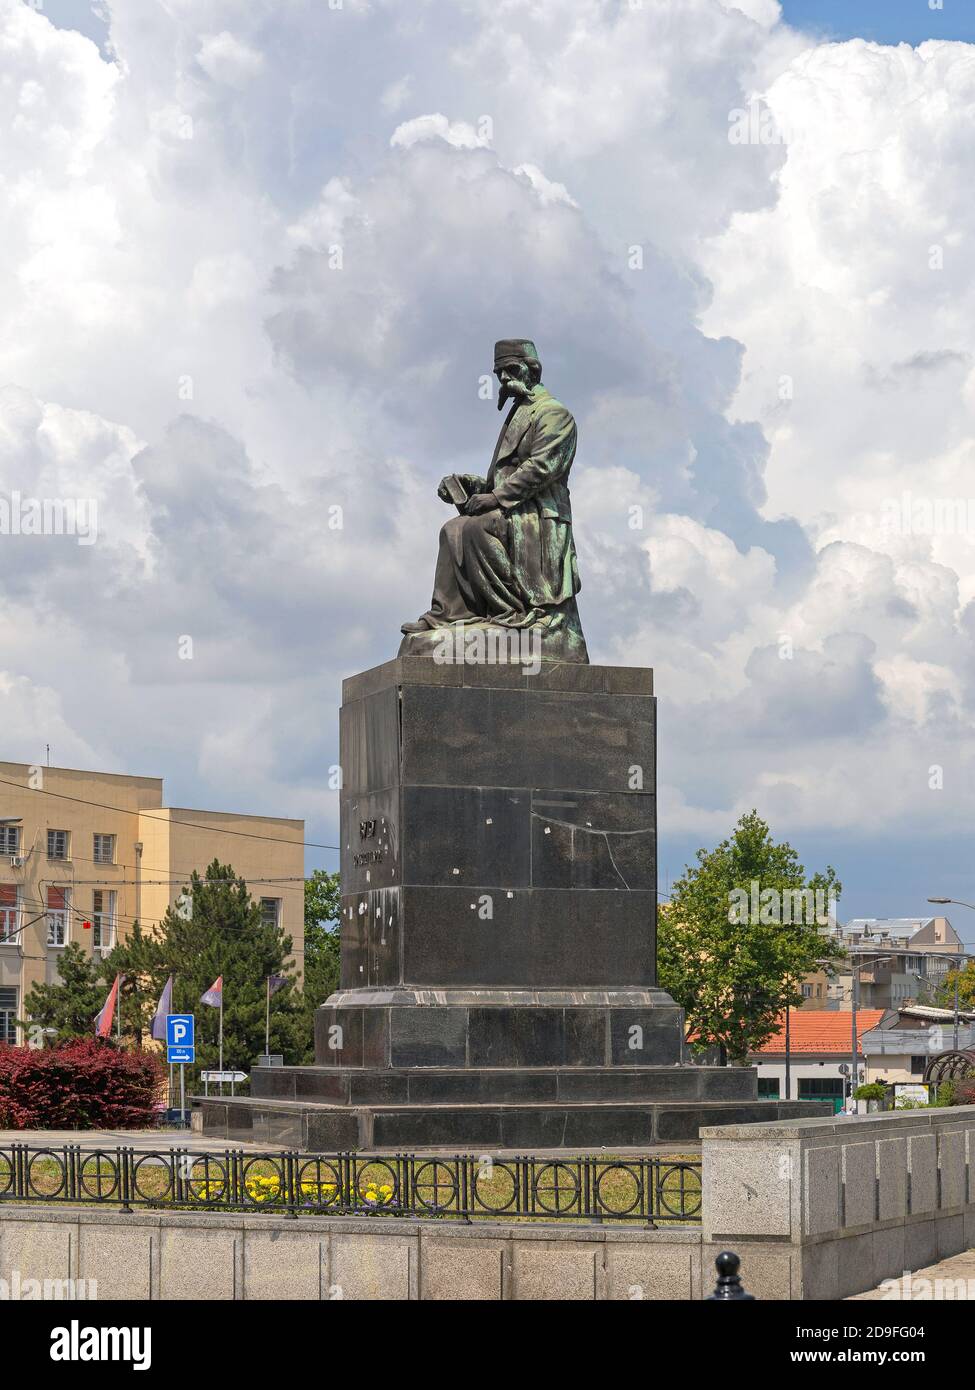 Belgrade, Serbie - 17 juin 2018 : monument Vuk Karadzic, philologue et linguiste serbe à Belgrade, Serbie. Banque D'Images